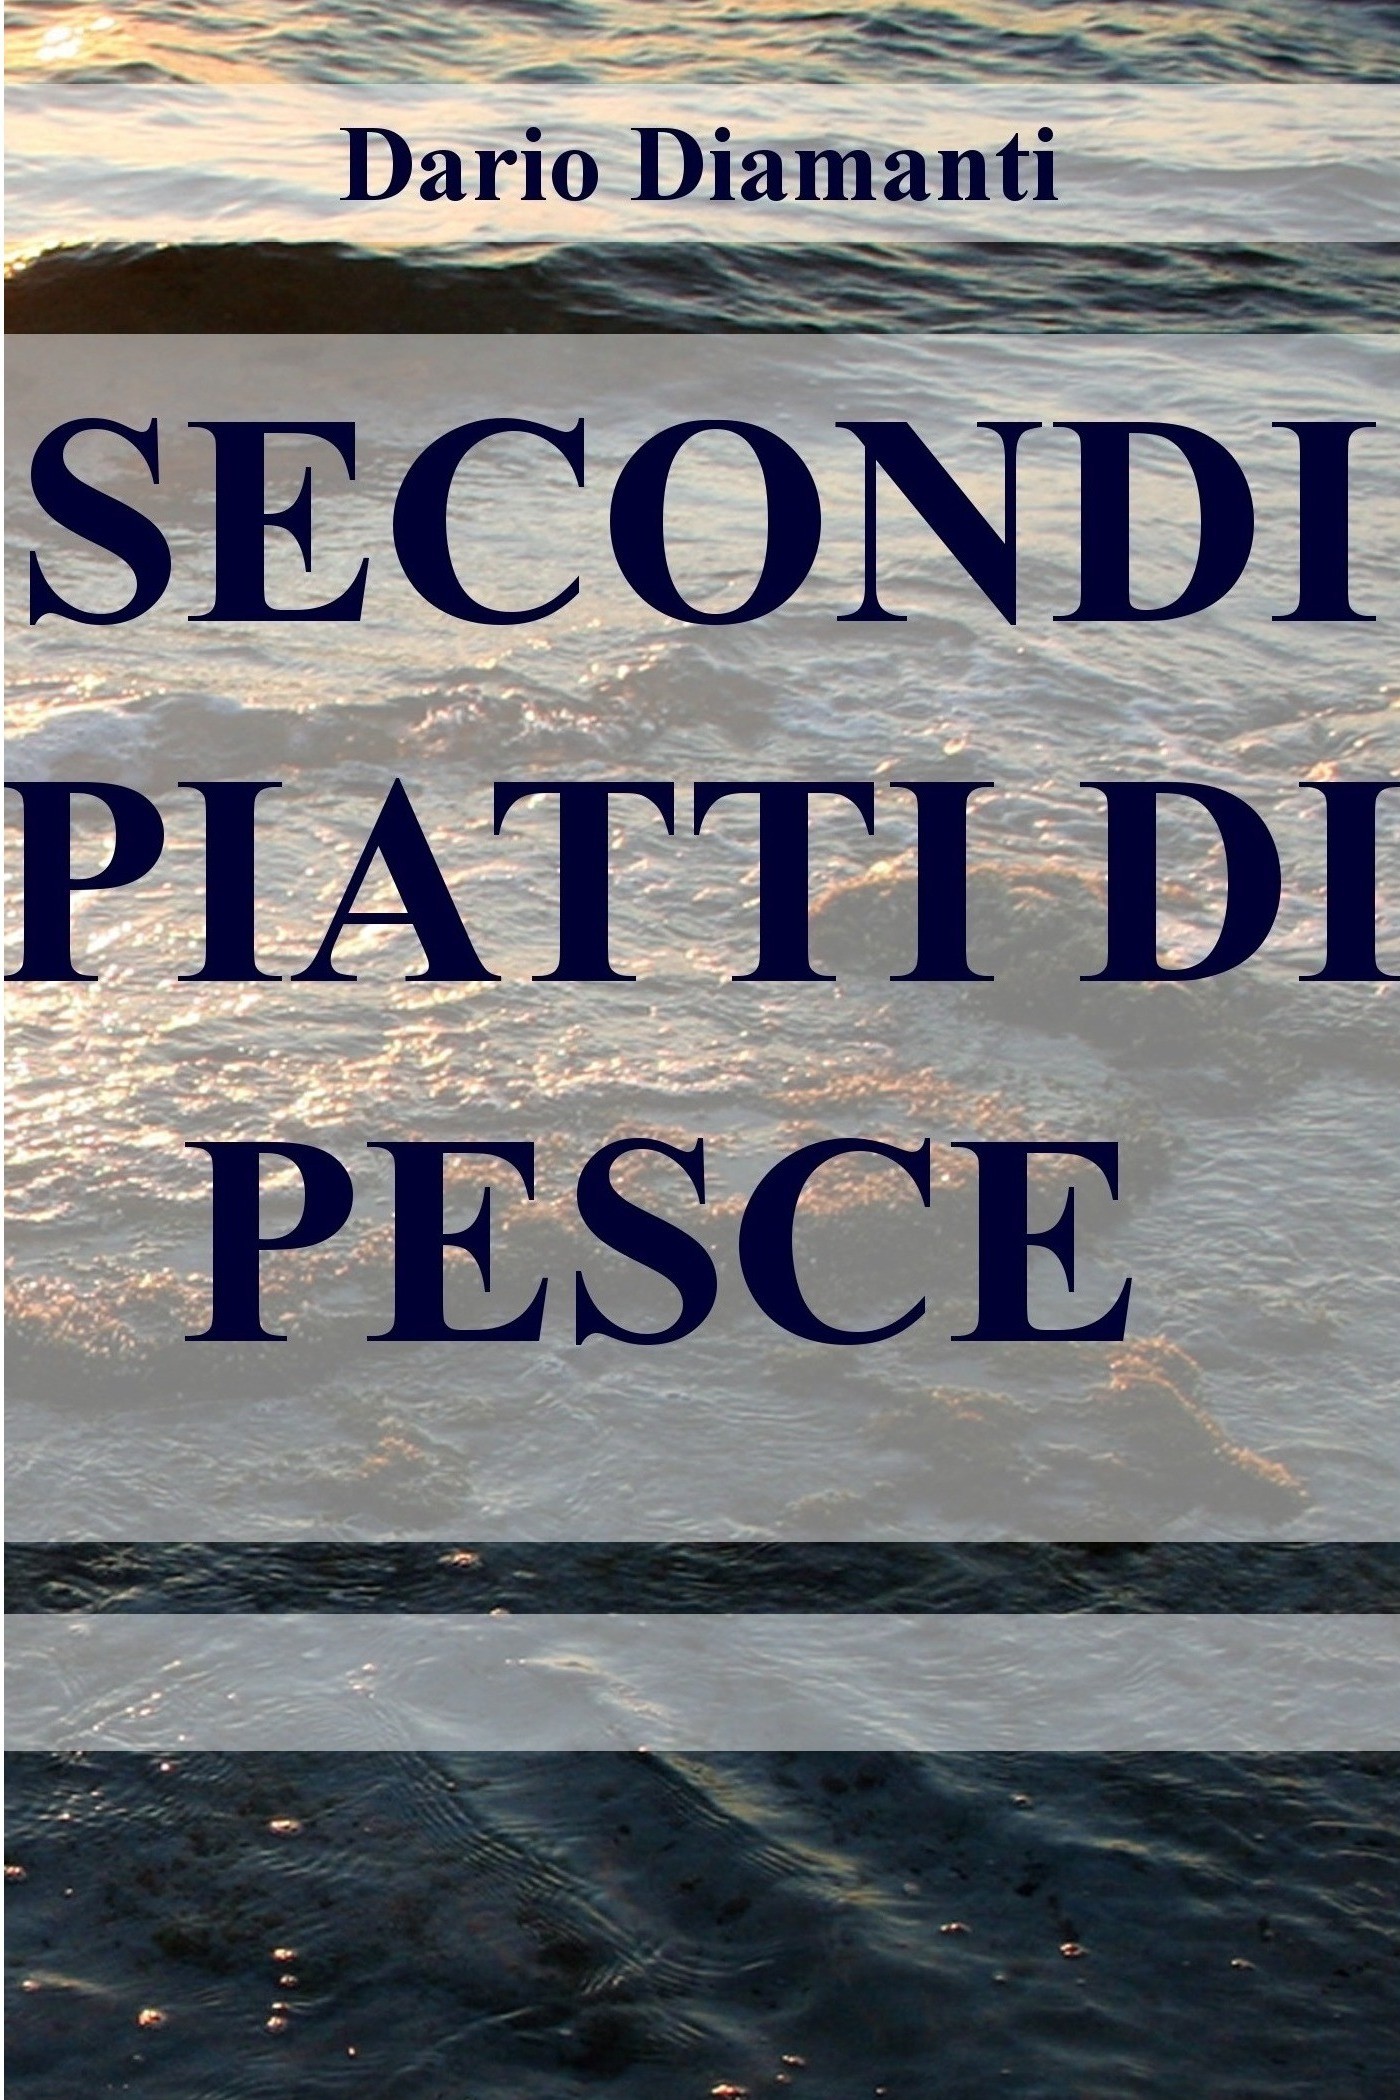 SECONDI PIATTI DI PESCE - Librerie.coop